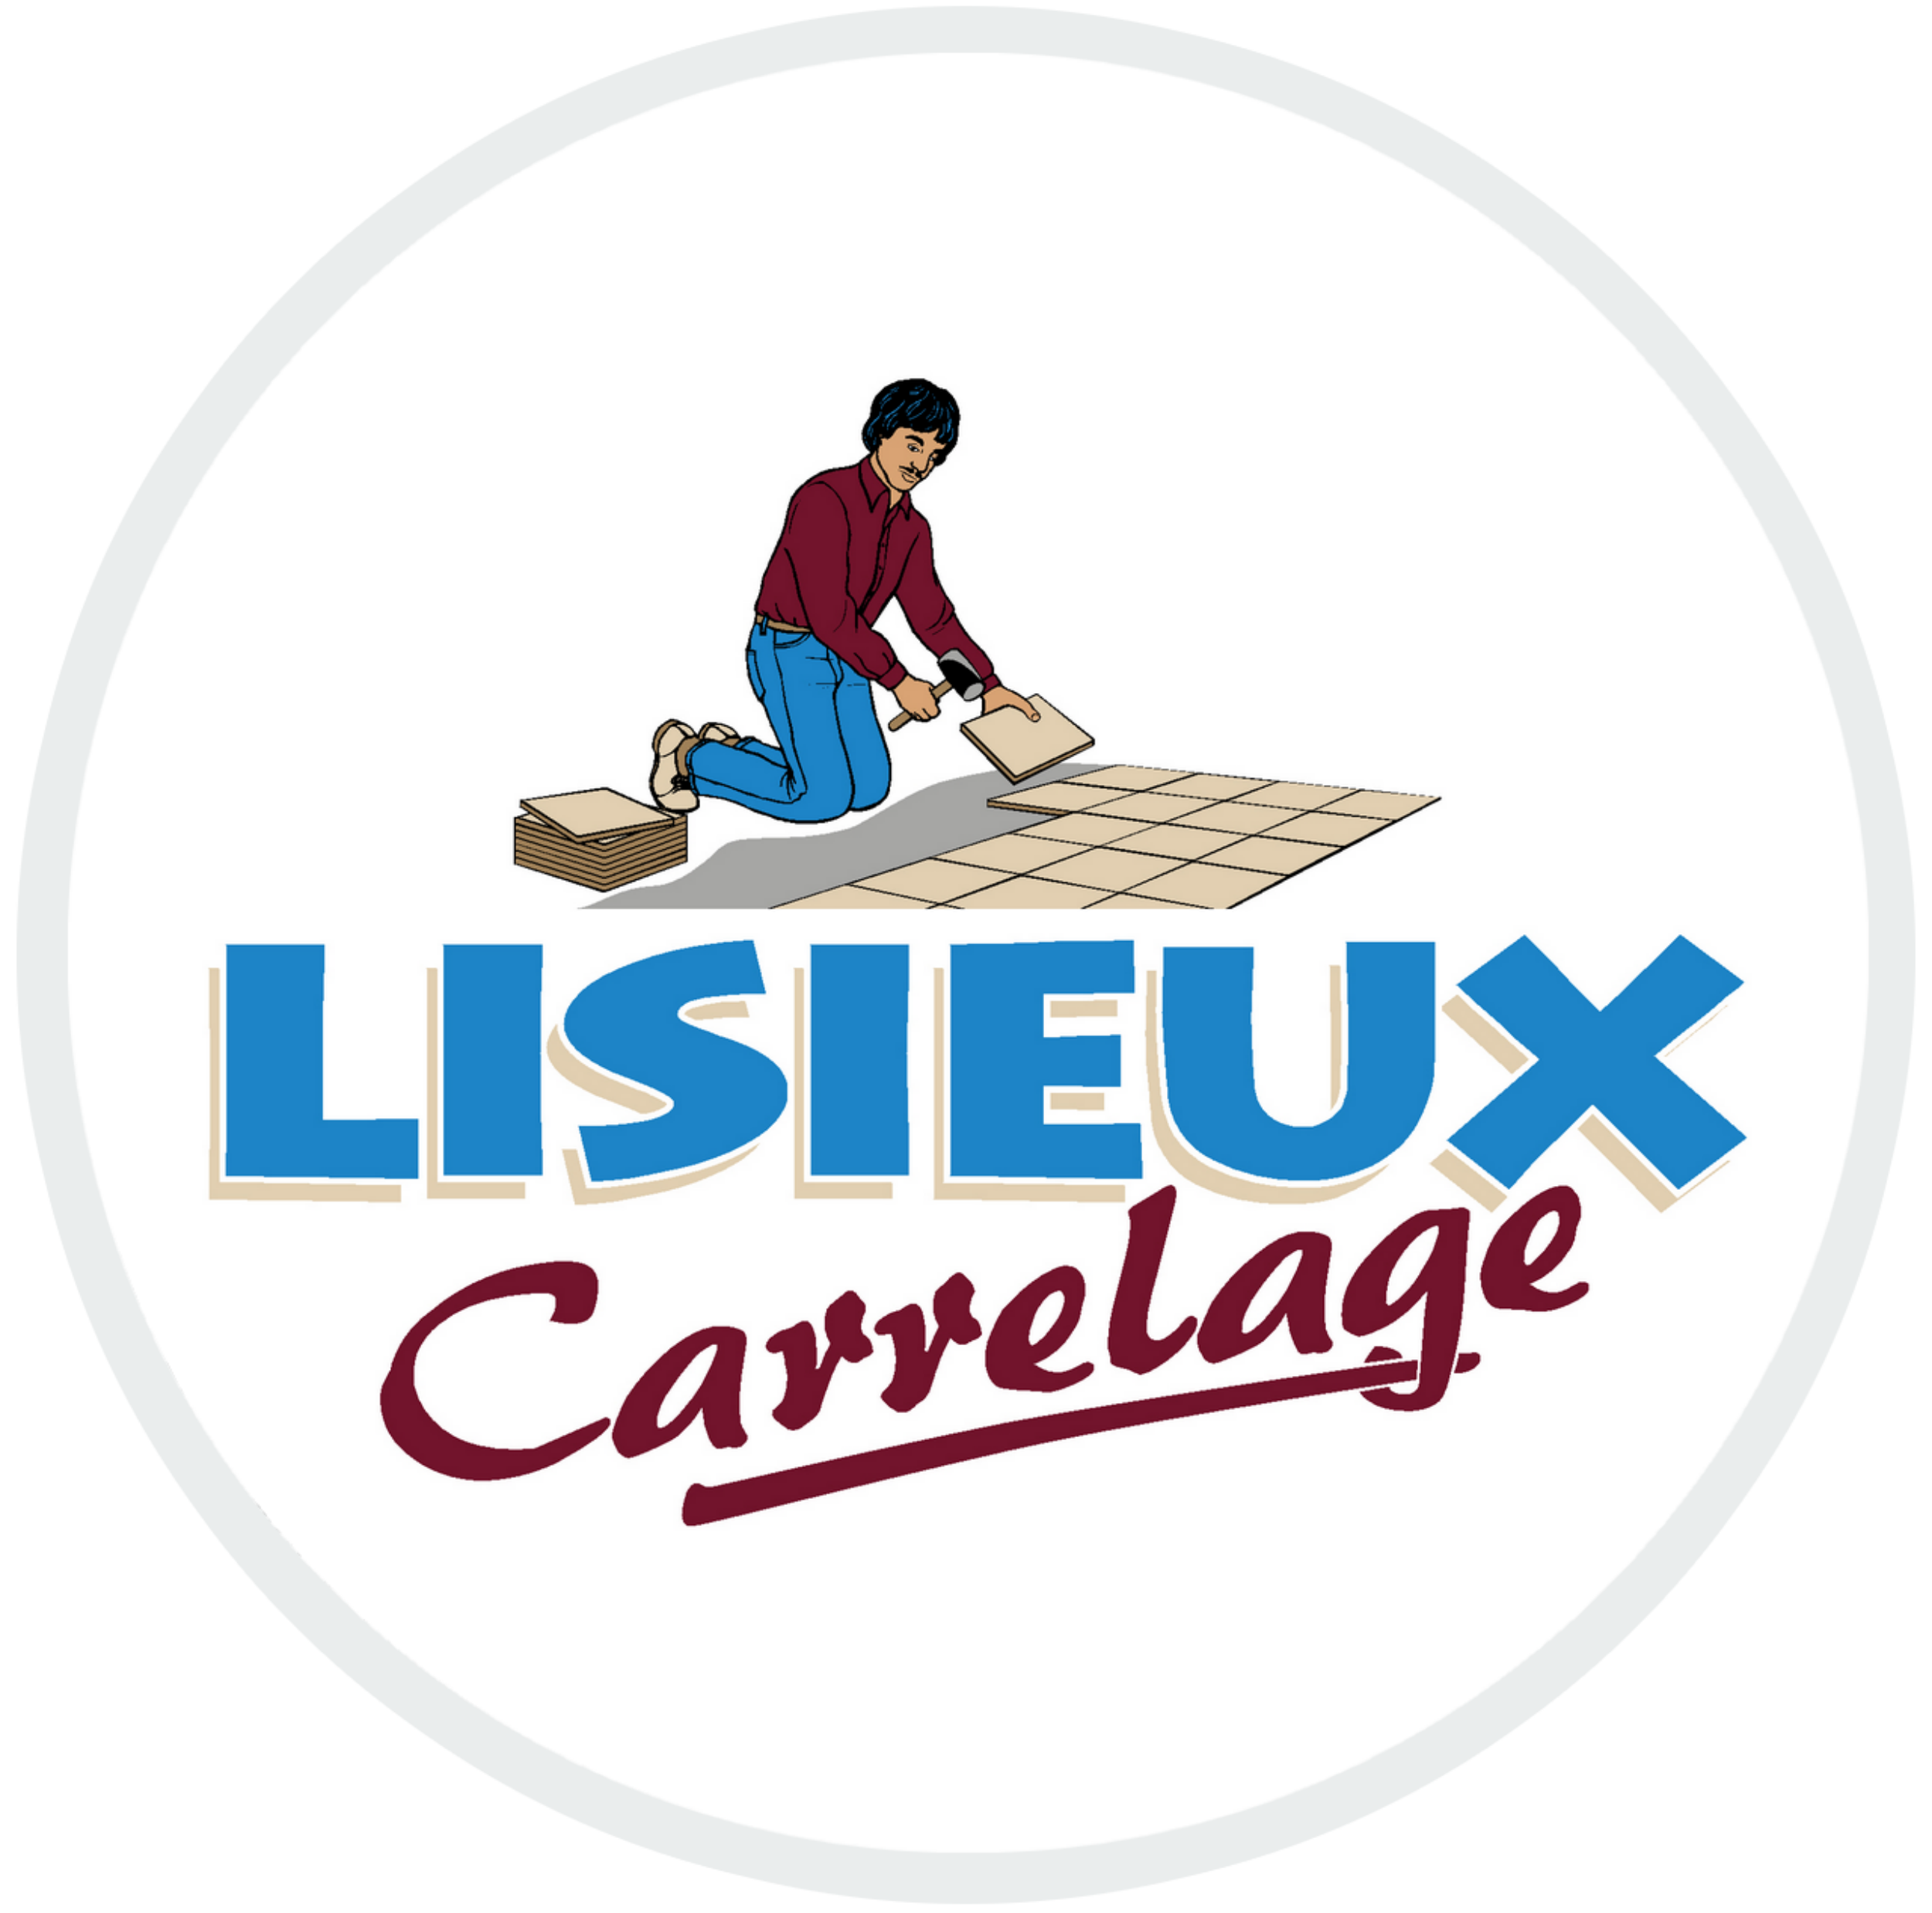 Lisieux Carrelage